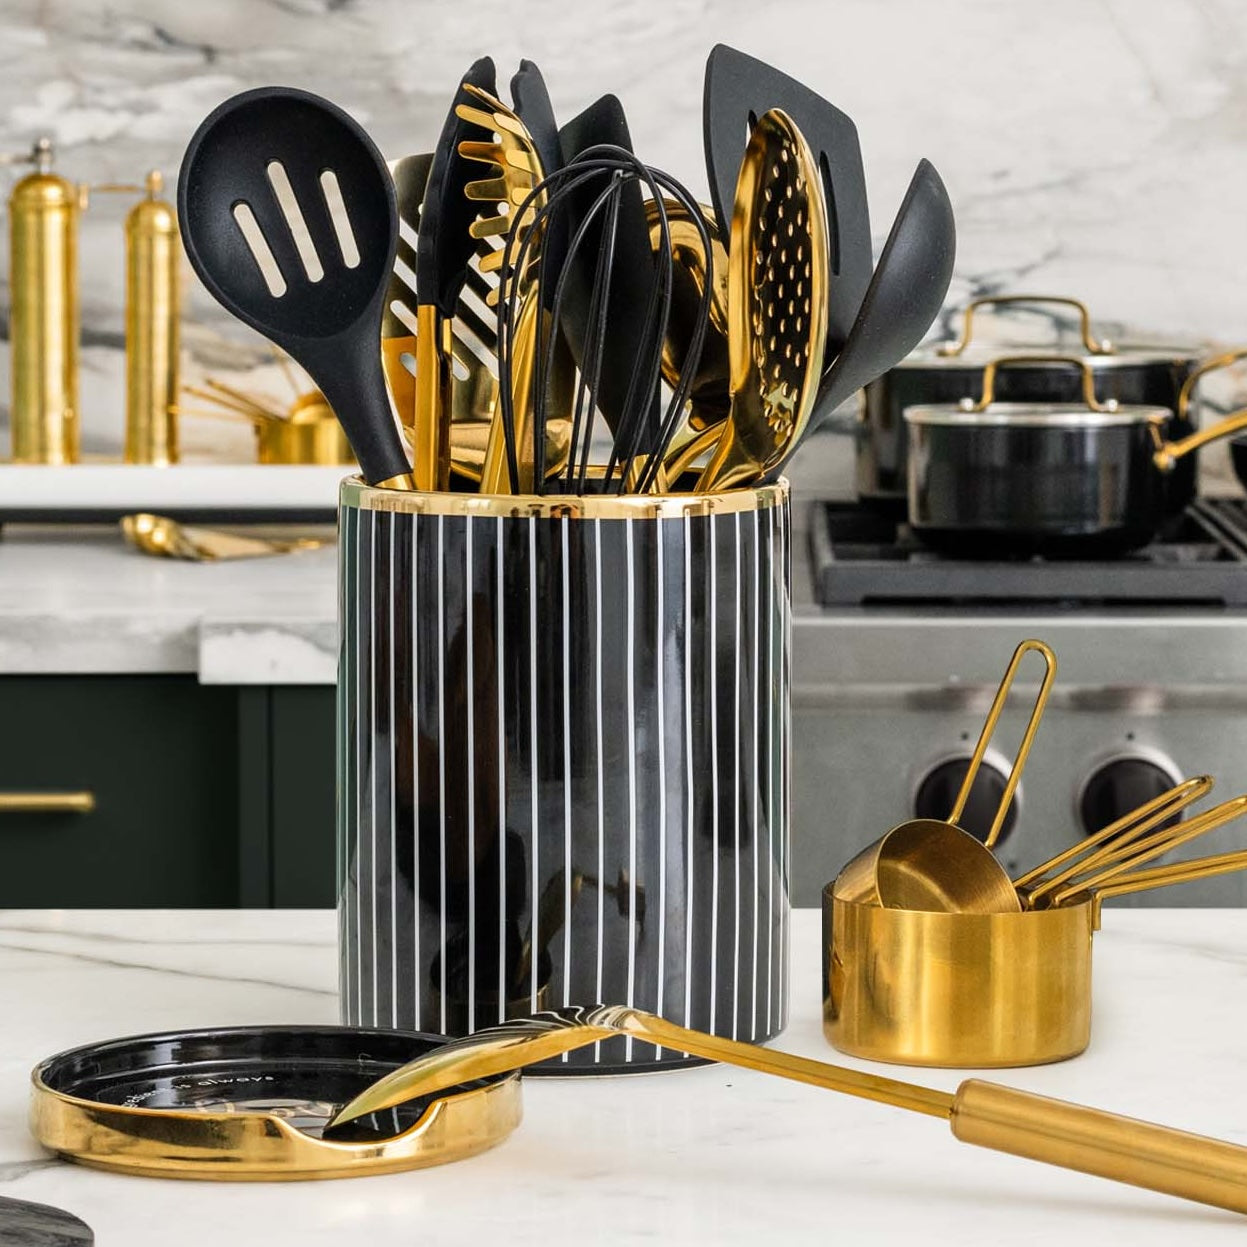 Black and Gold Complete Kitchen Utensils Set